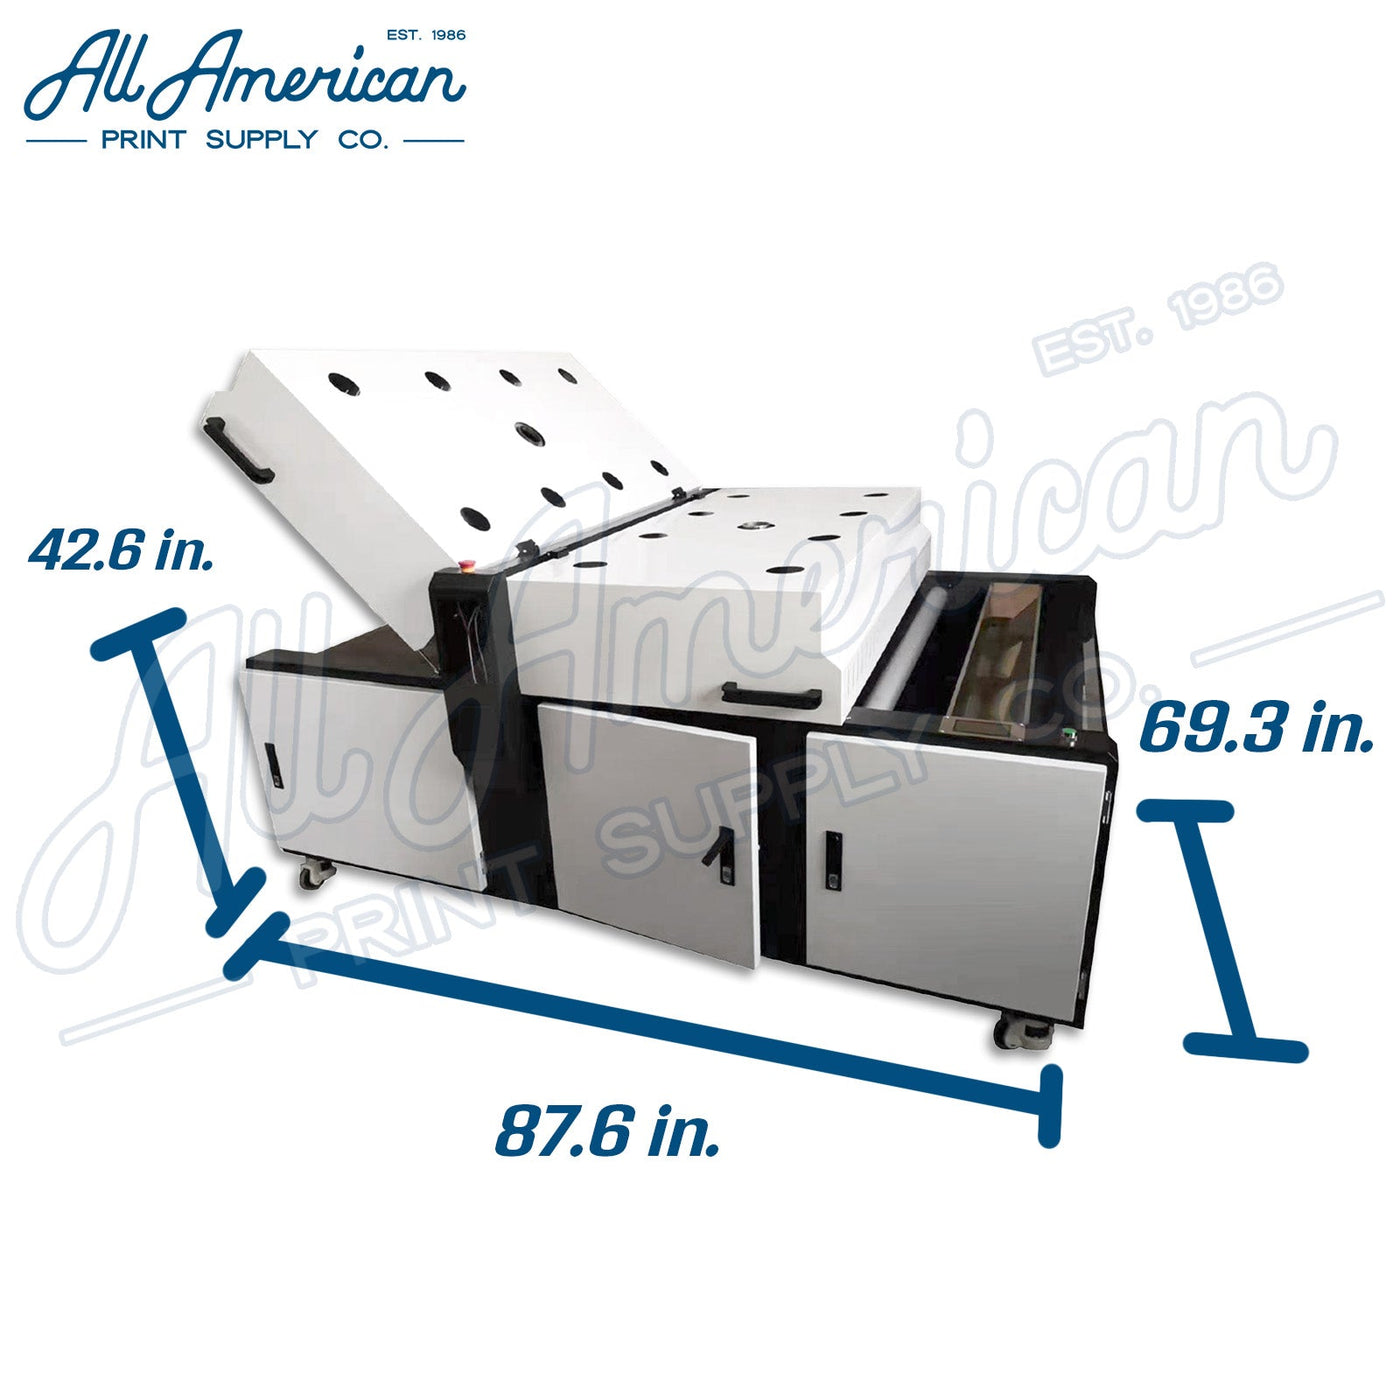 DTF Powder Applicator Dryer Direct to Film measurements